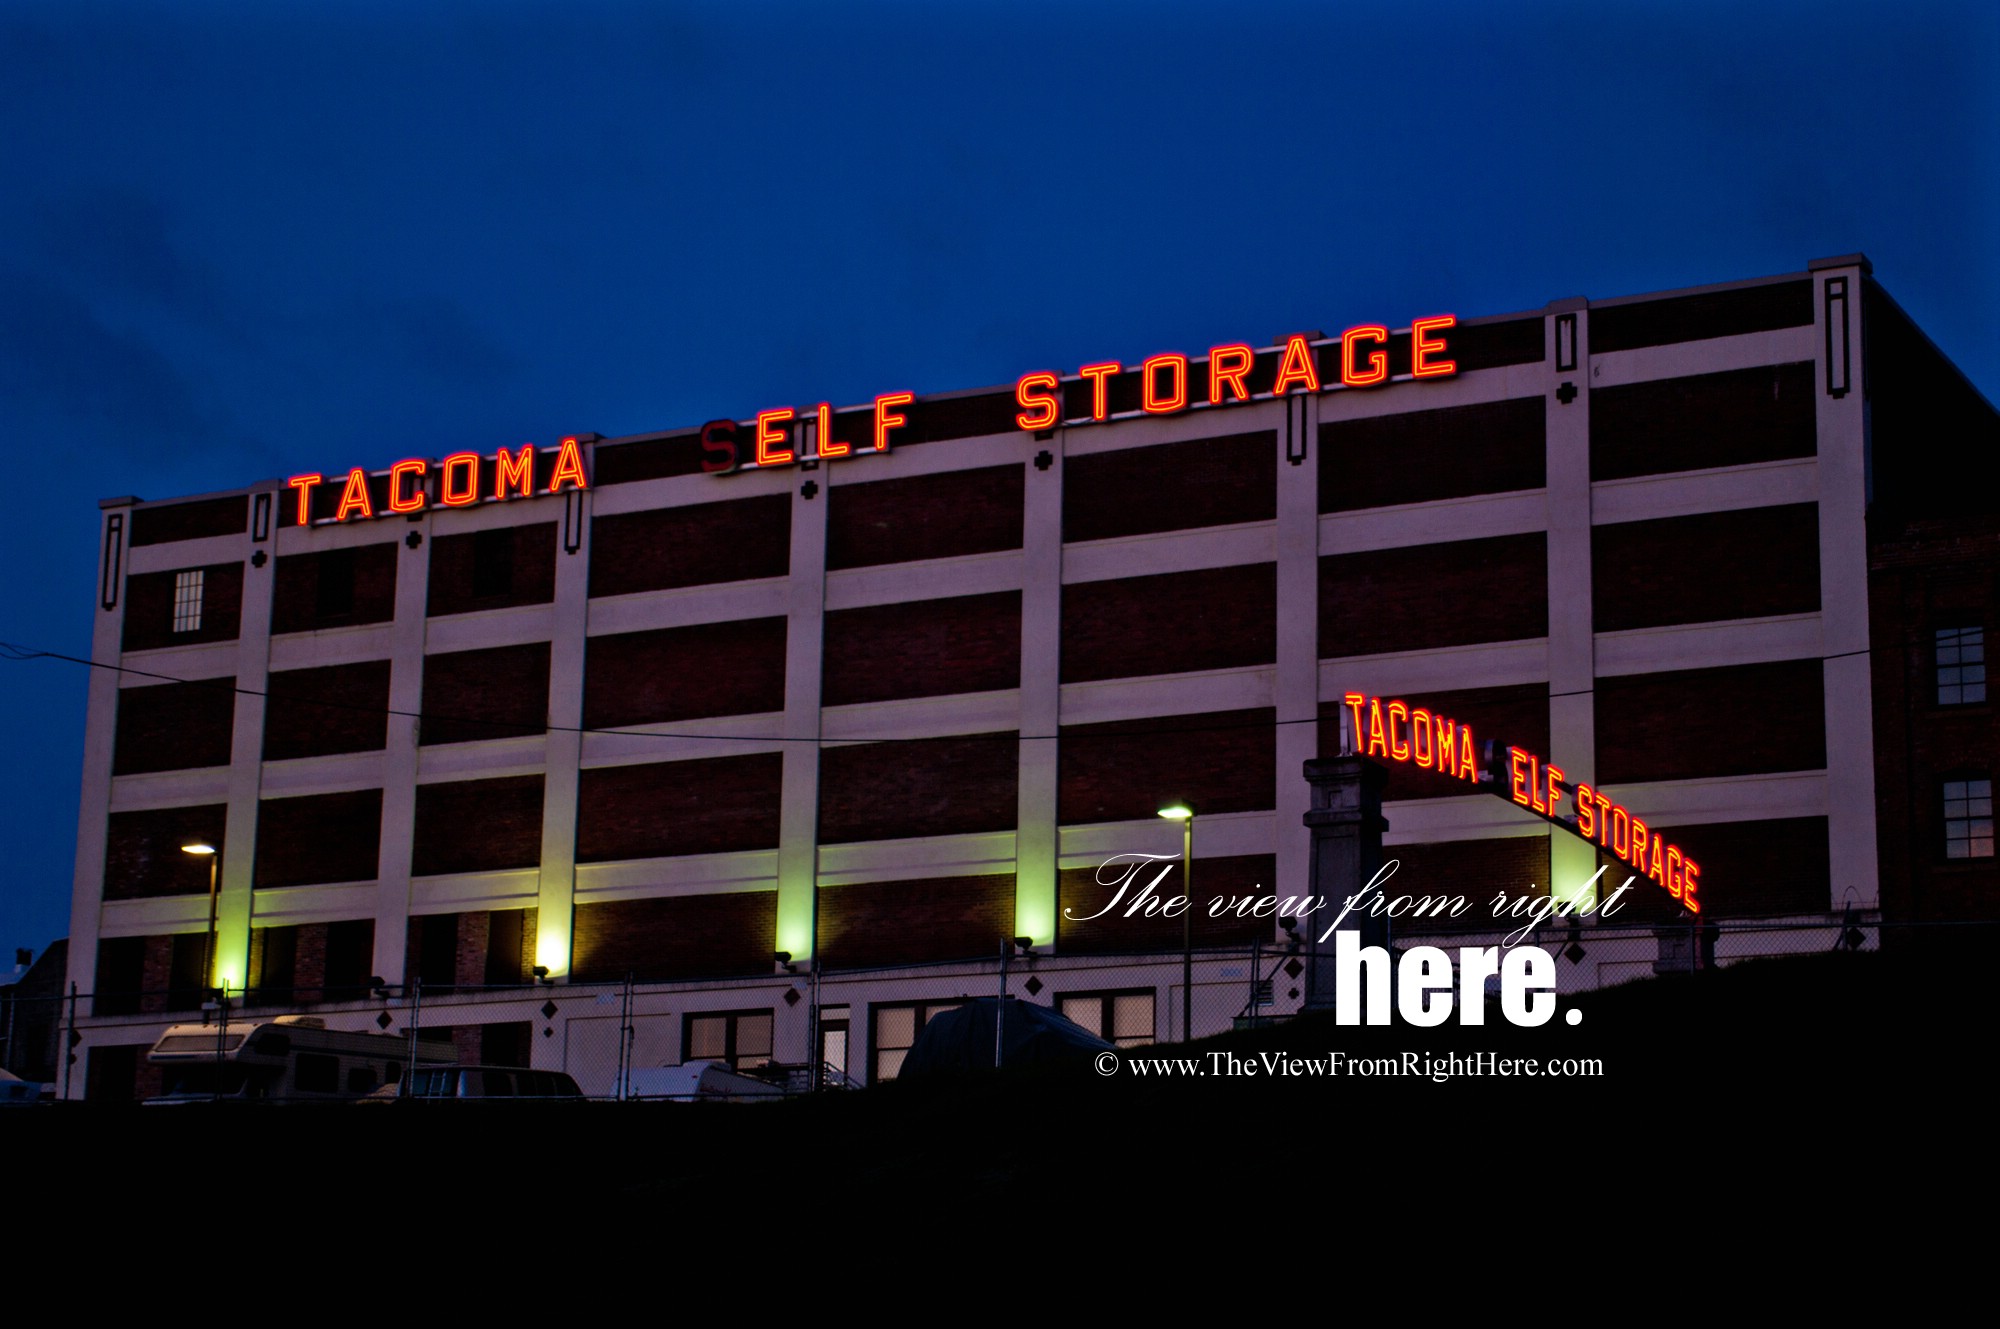 Tacoma Elf Storage – Santa’s Secret Revealed!